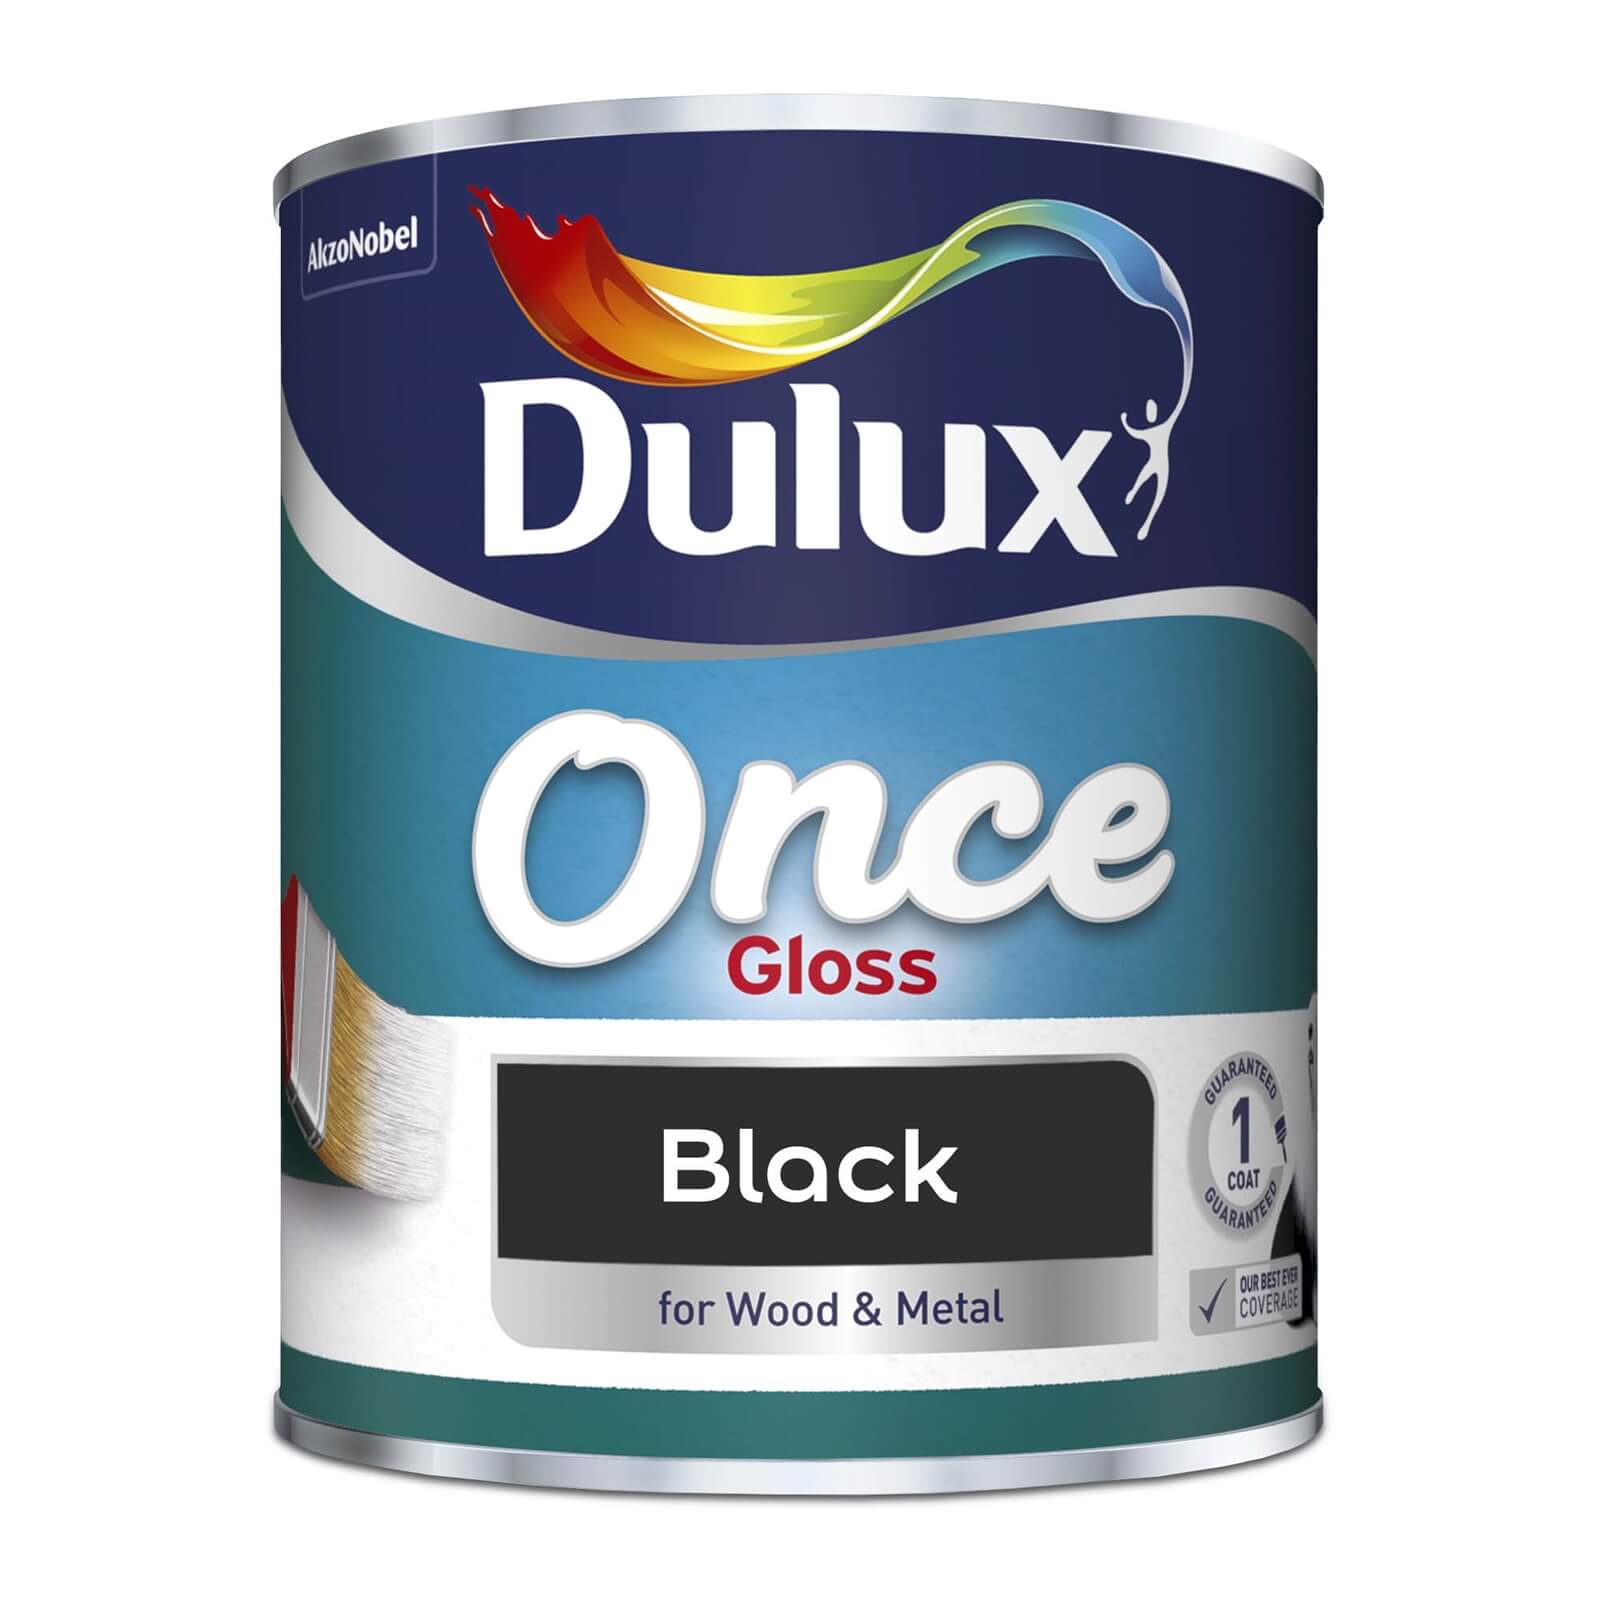 Dulux Once Gloss Paint Black - 750ml